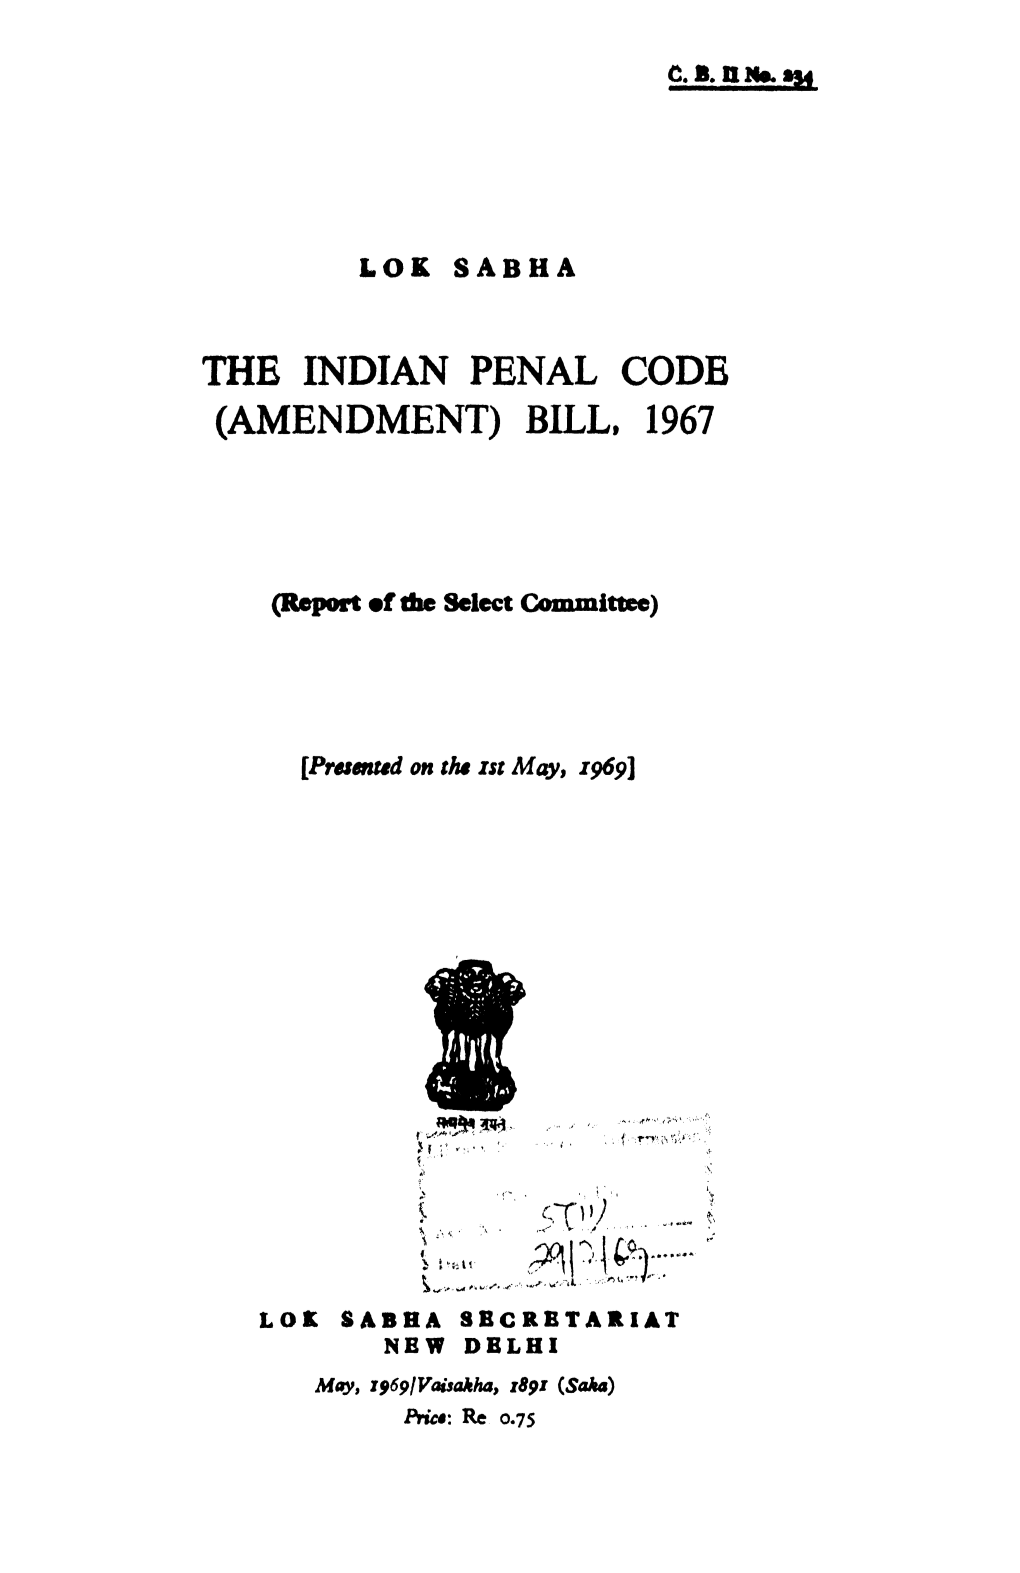 The Indian Penal Code (Amendment) Bill